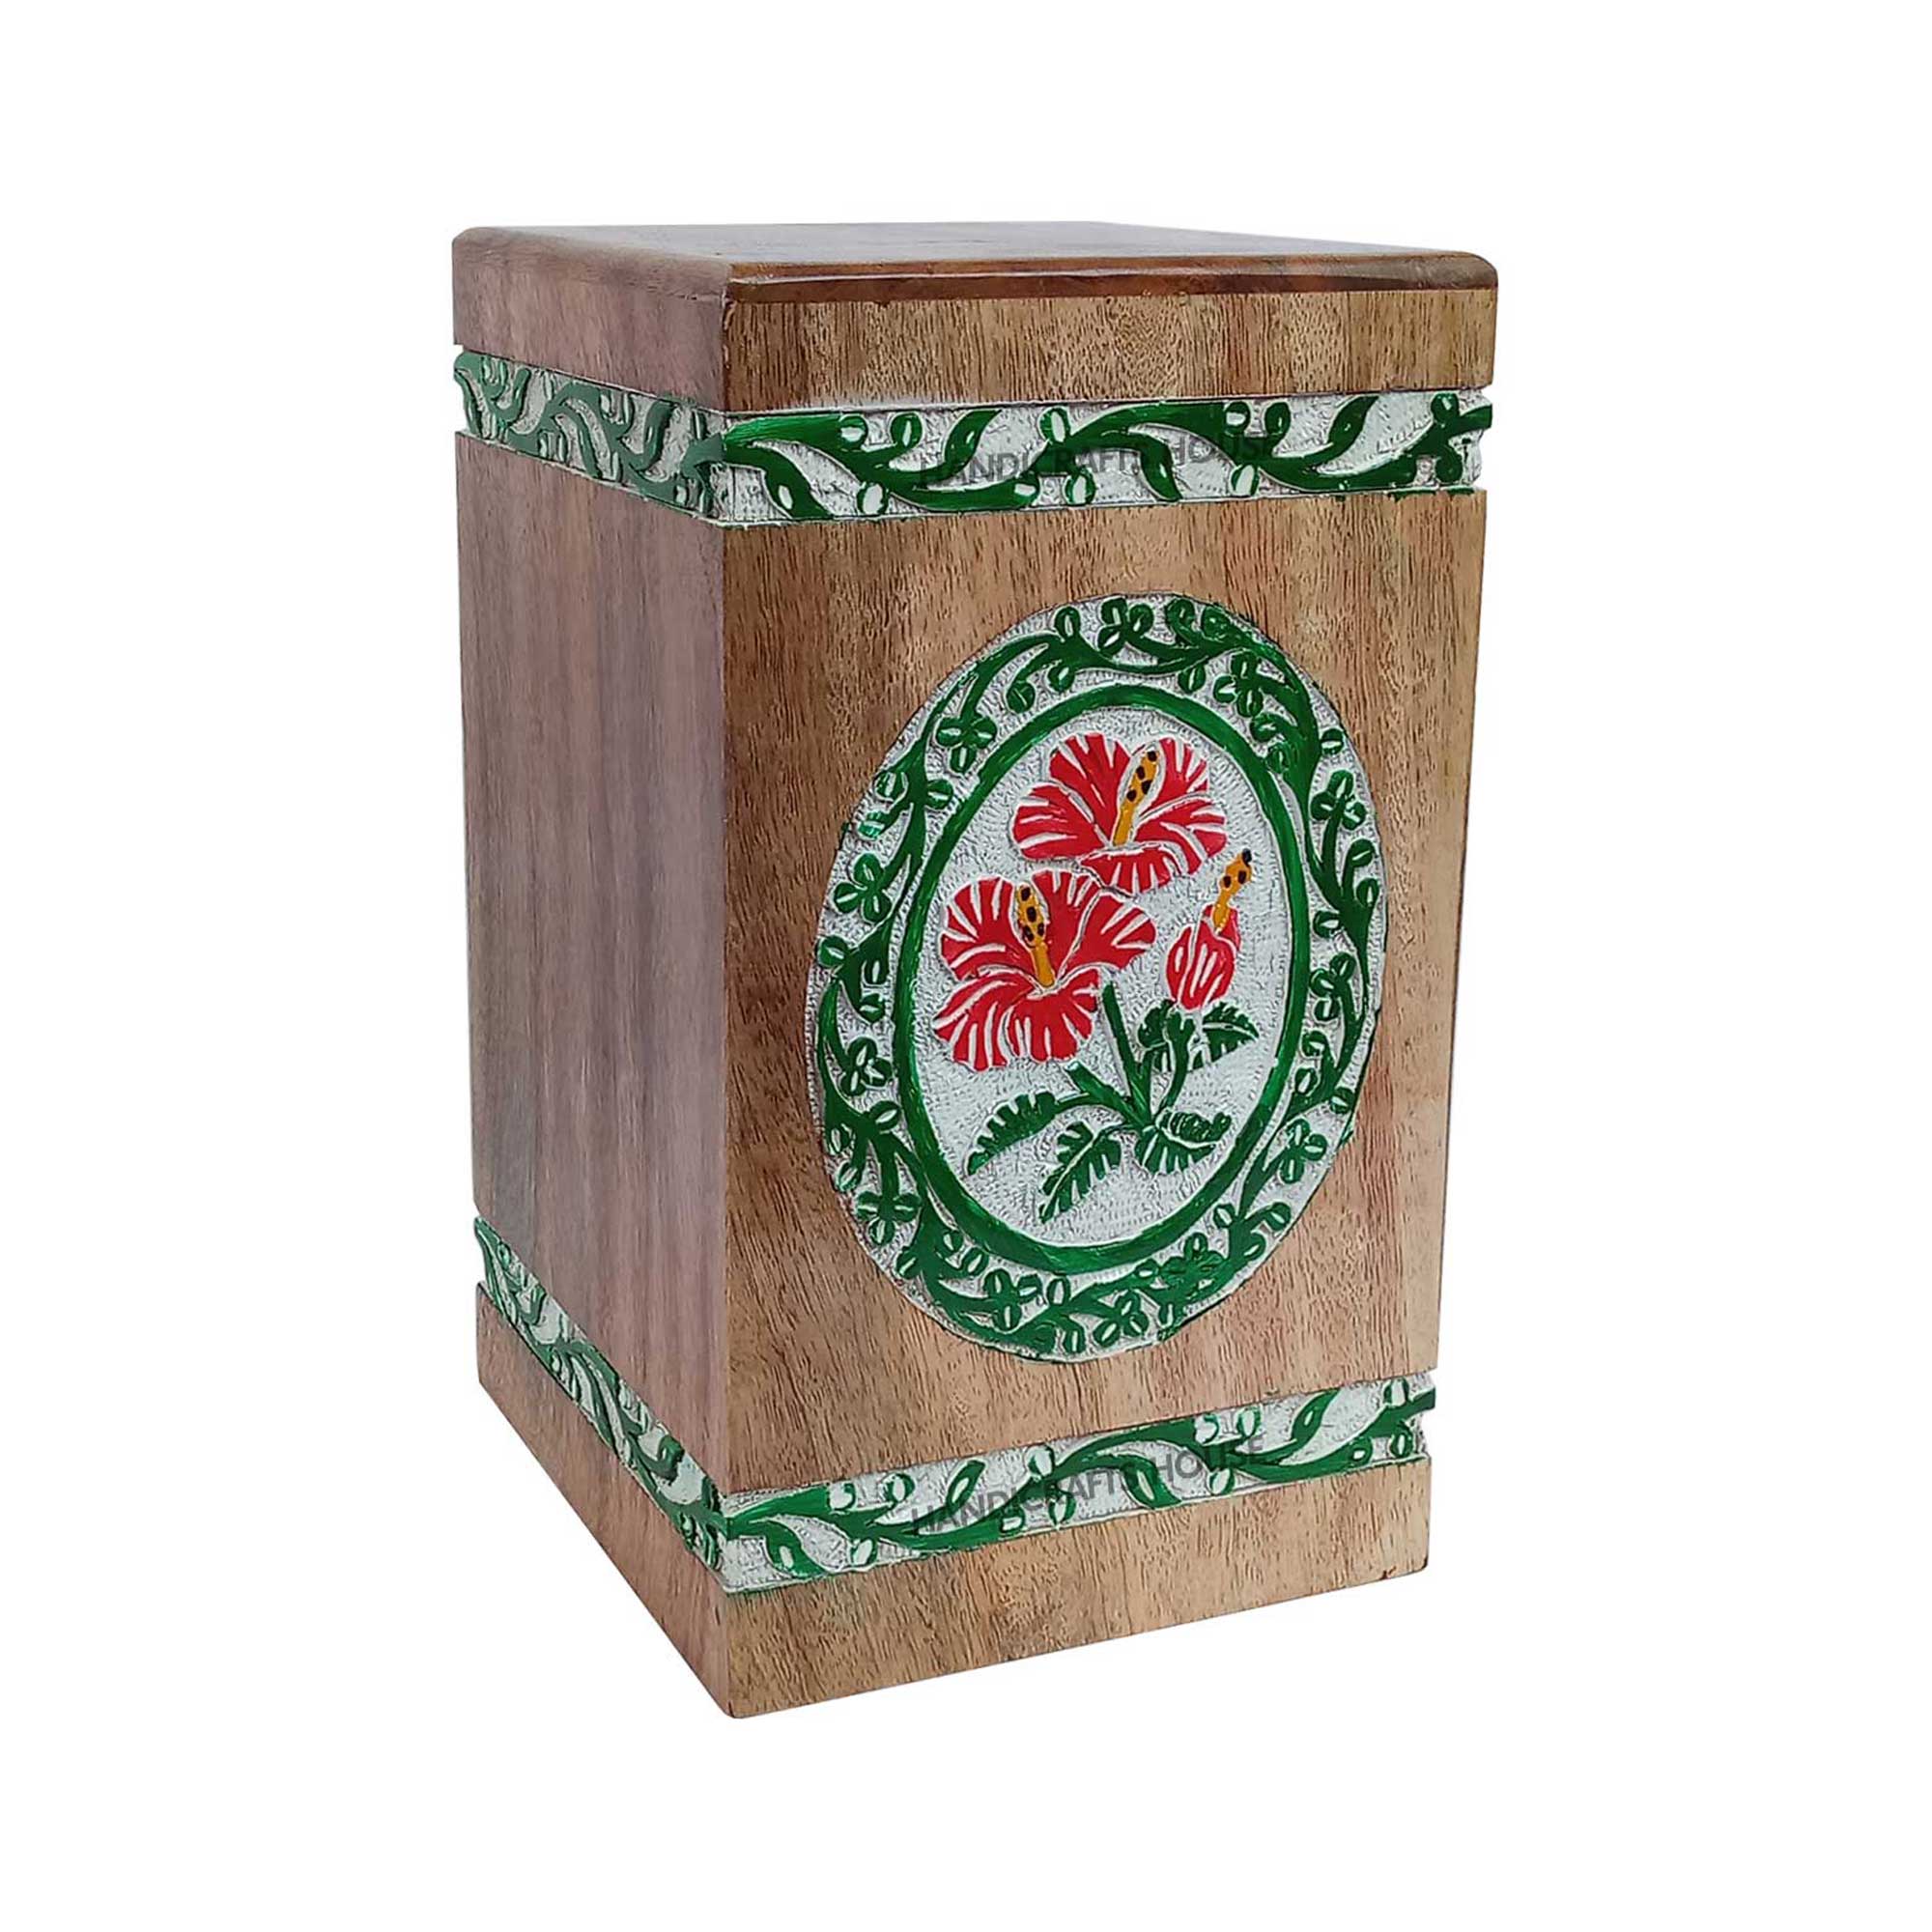 Wood Box For Human Ashes - Timber Adult Urn, Memorials Keepsake